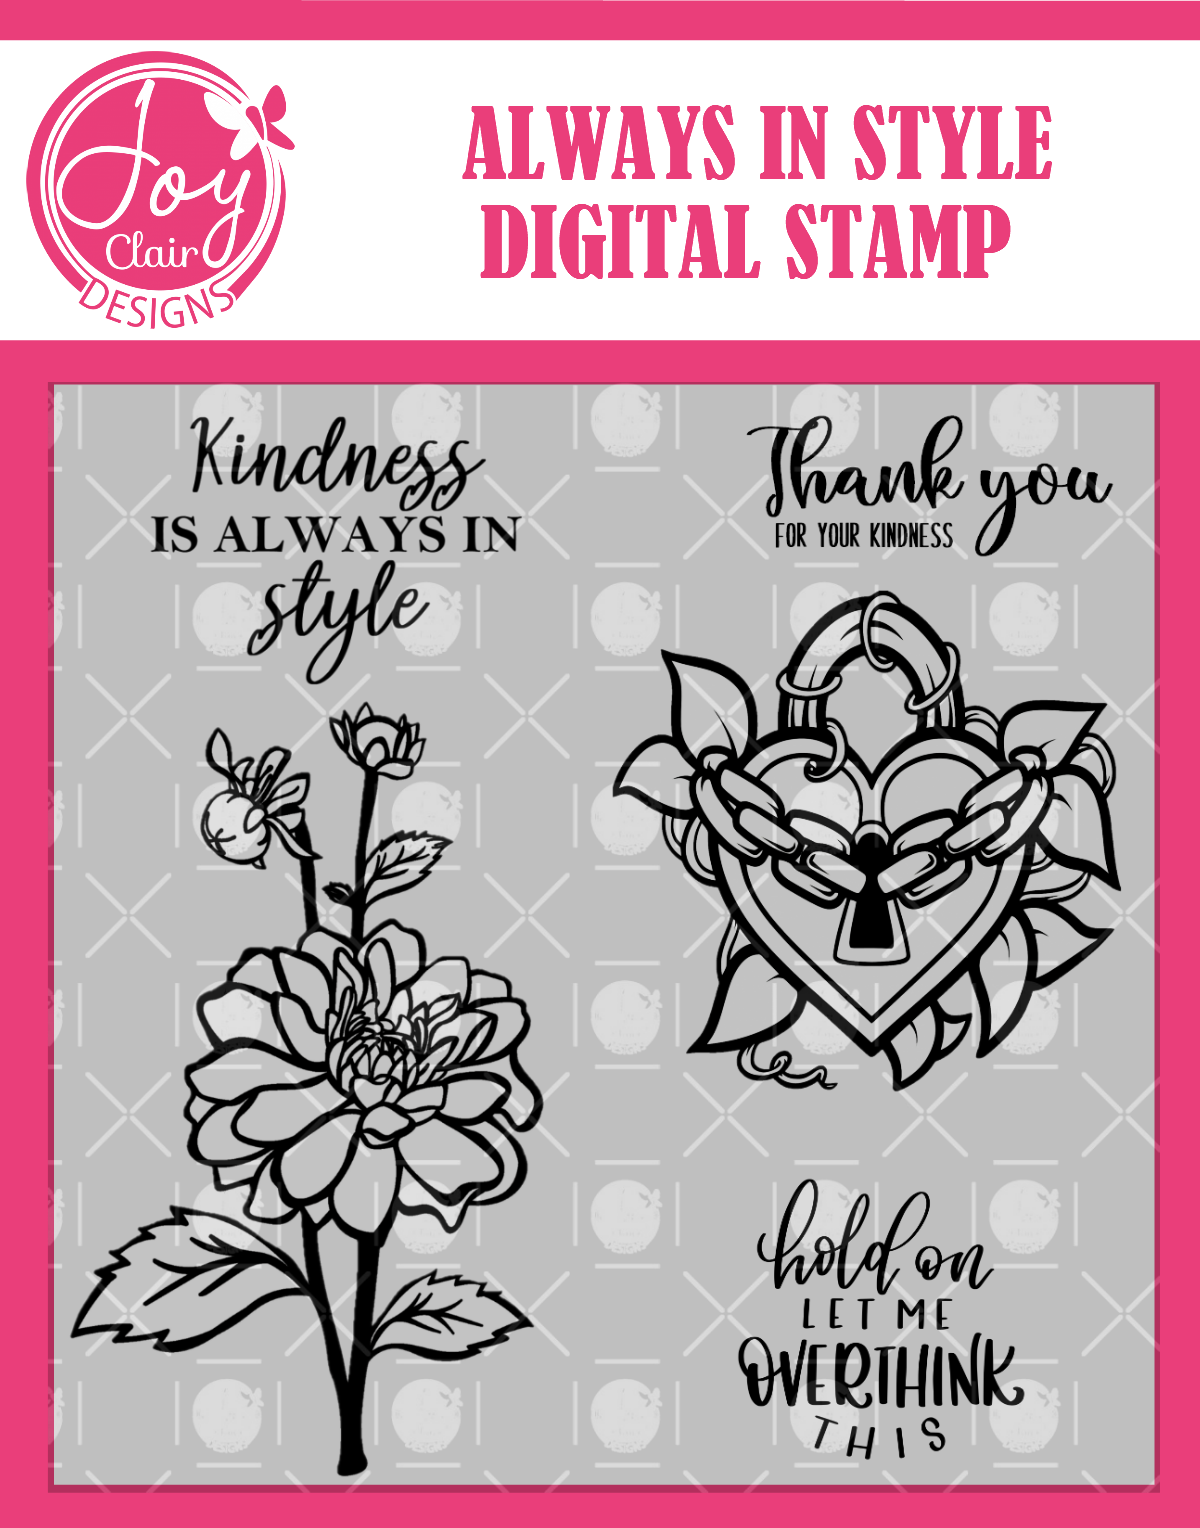 Always in Style digital stamp set